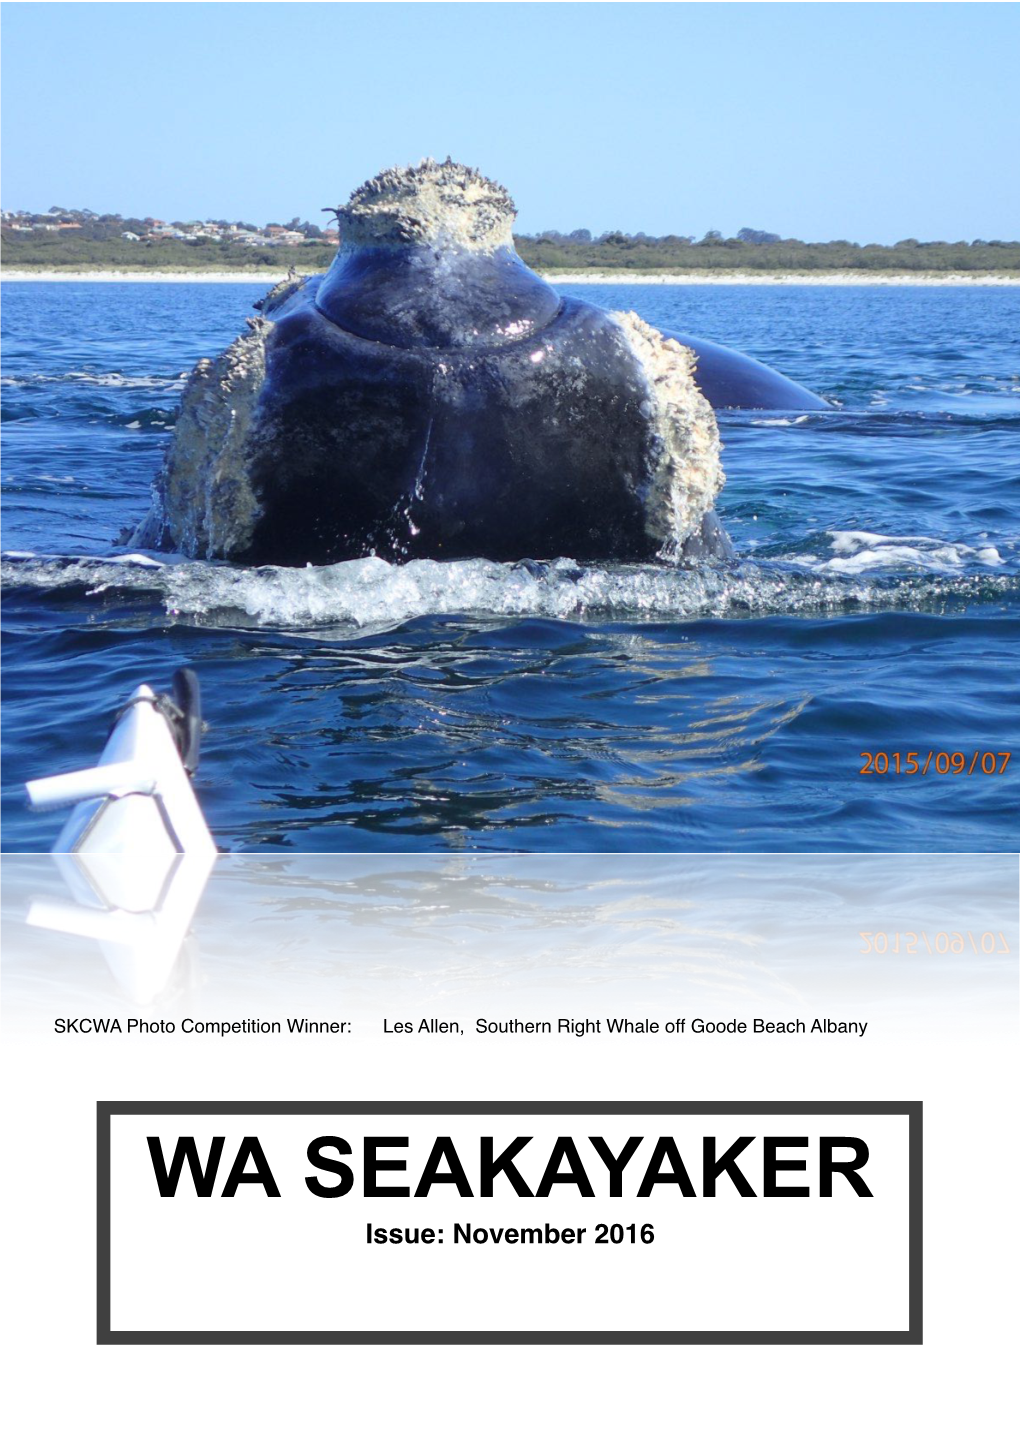 WA SEAKAYAKER Issue: November 2016 Welcome to the November 2016 Newsletter of the Sea Kayak Club WA